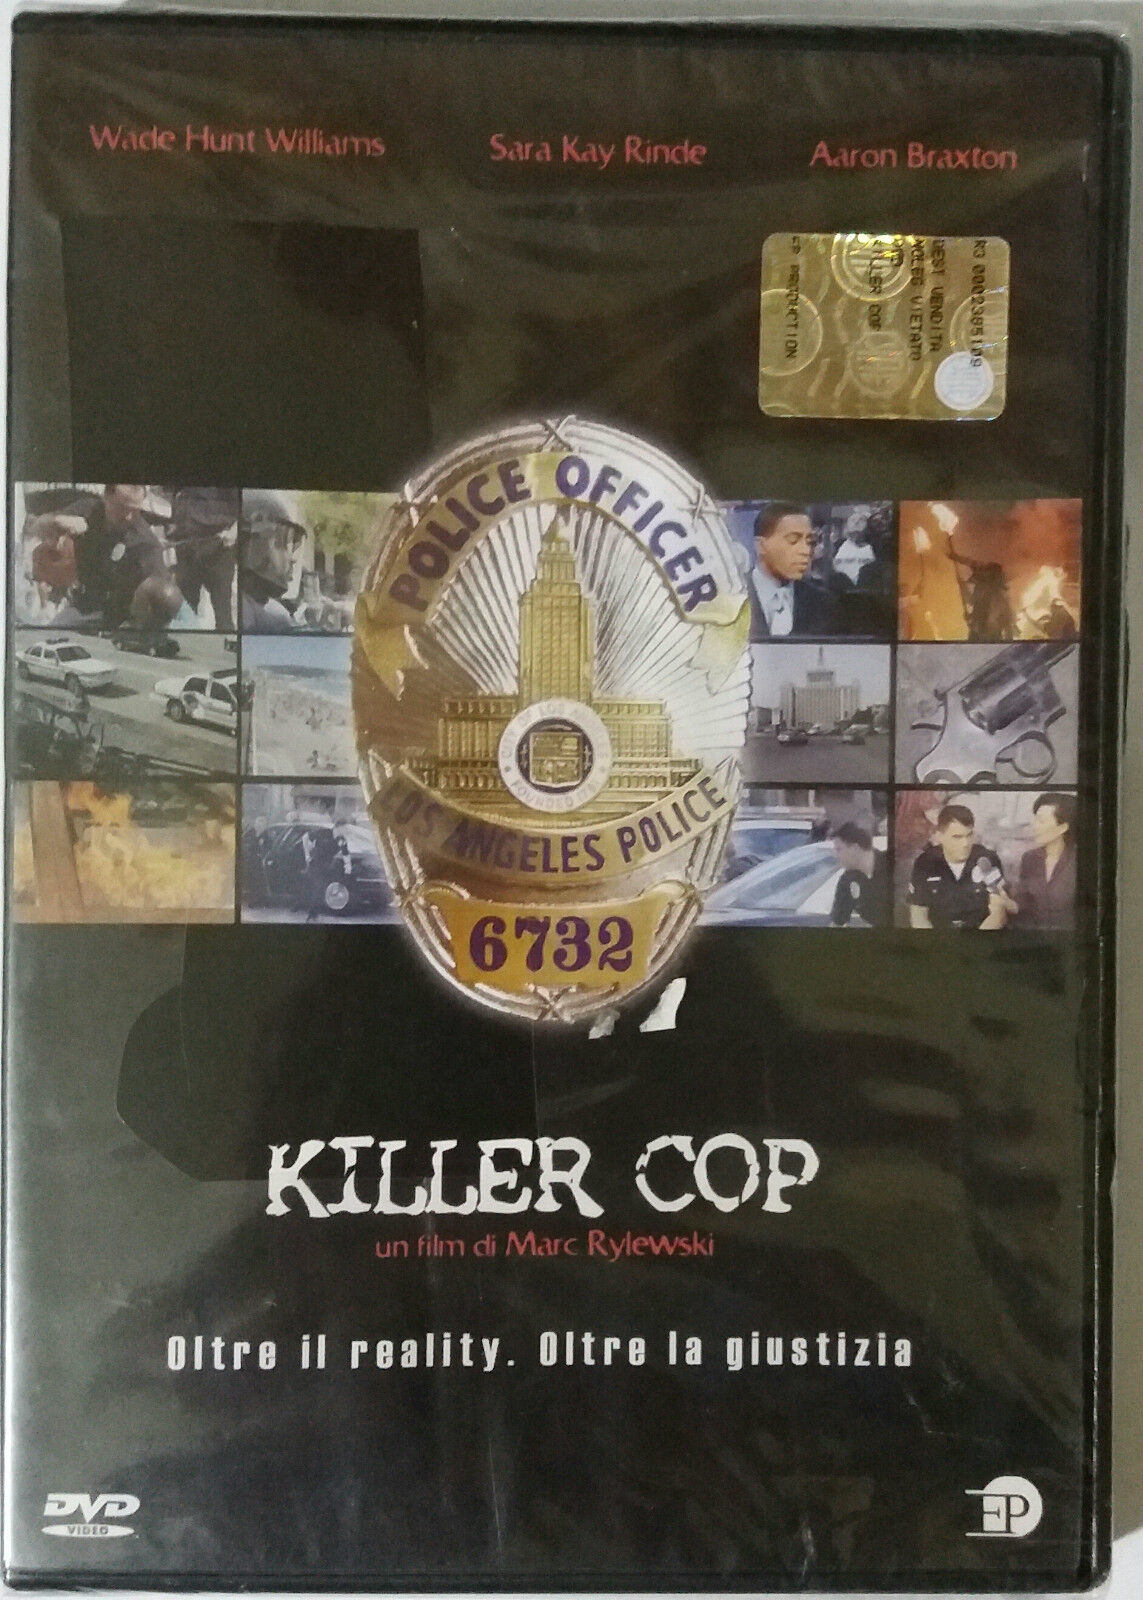 Killer Cop - Marc Rylewski - Enrico Pinocci - 2002 - DVD - G dvd usato